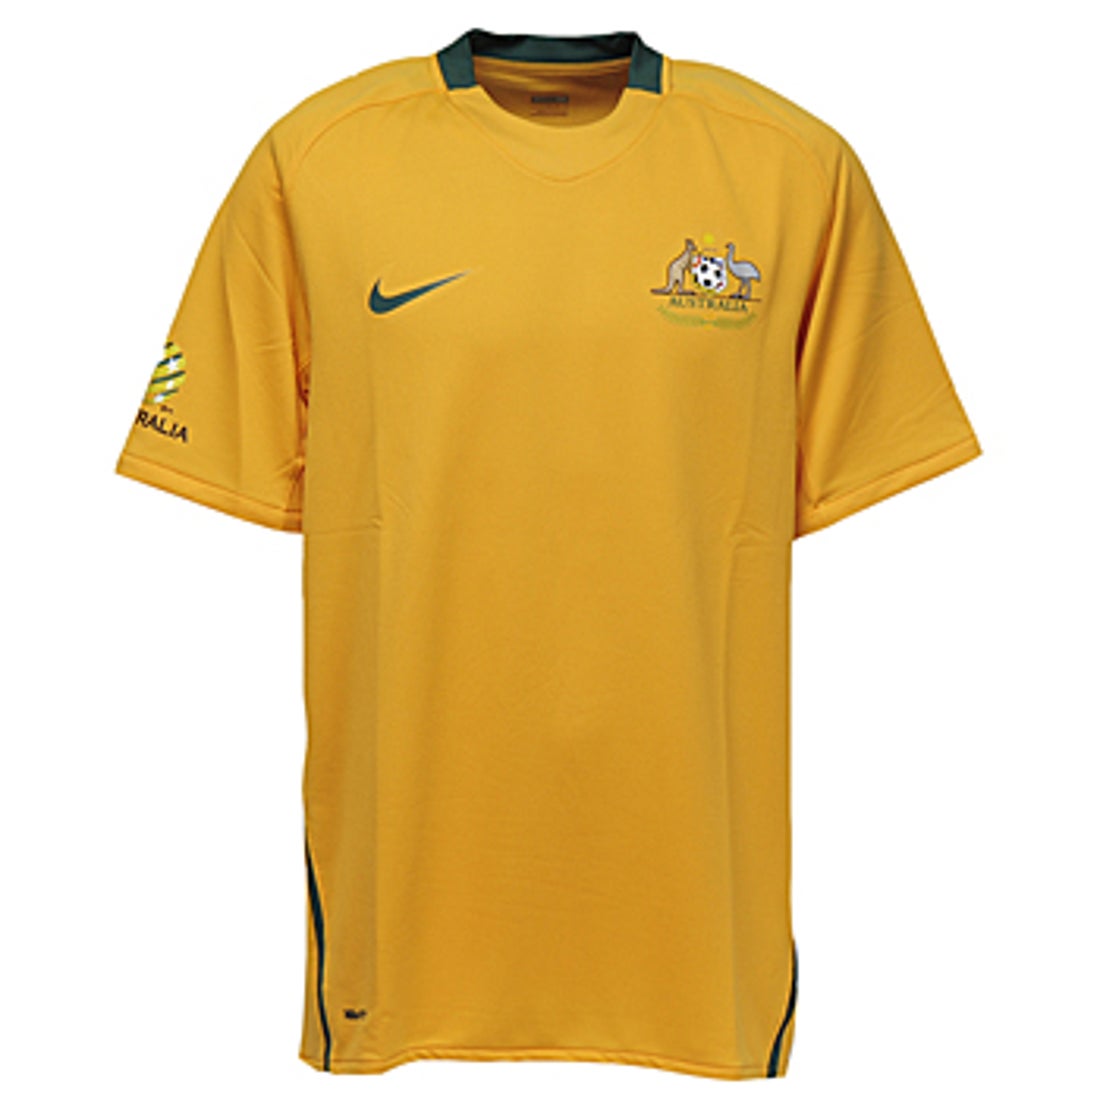 Nike オーストラリア代表 08 09 ユニフォーム ホーム 半袖 702 代表 クラブユニフォーム サッカーショップ Sws